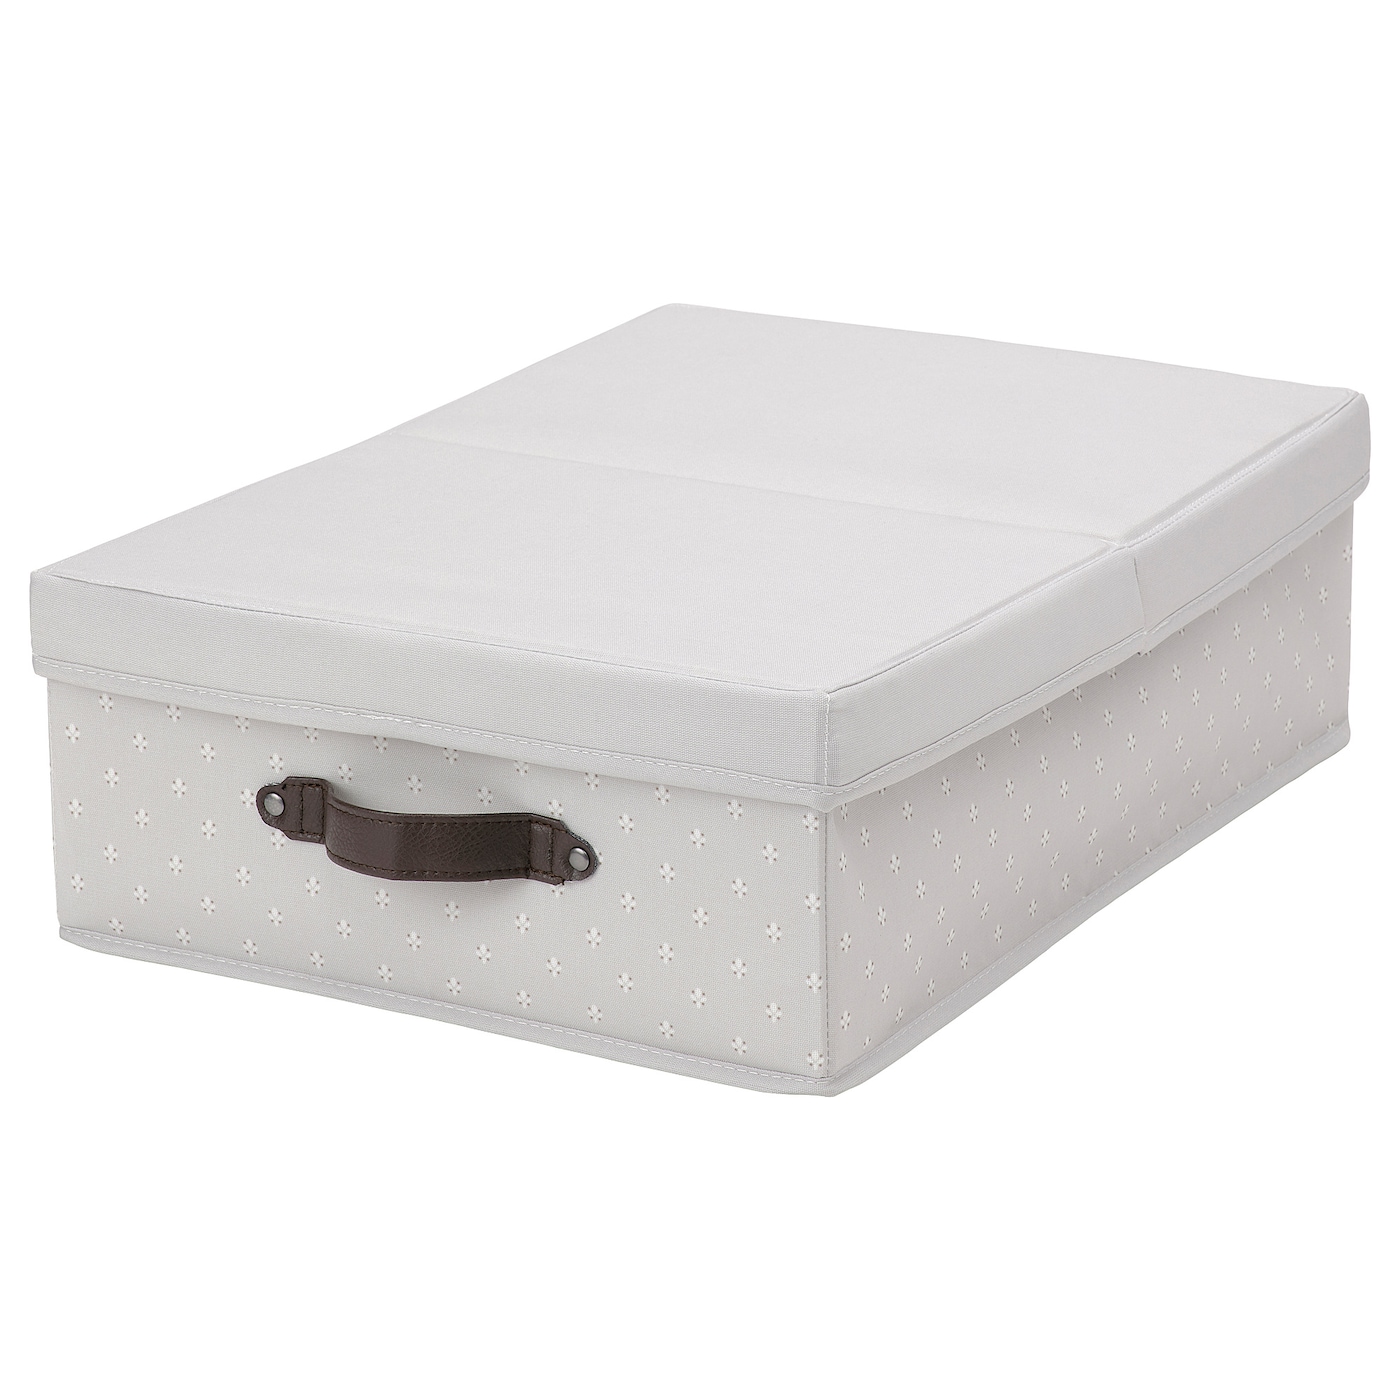 BLÄDDRARE БЛЭДДРАРЕ Коробка с крышкой, серый/с рисунком, 35x50x15 см IKEA